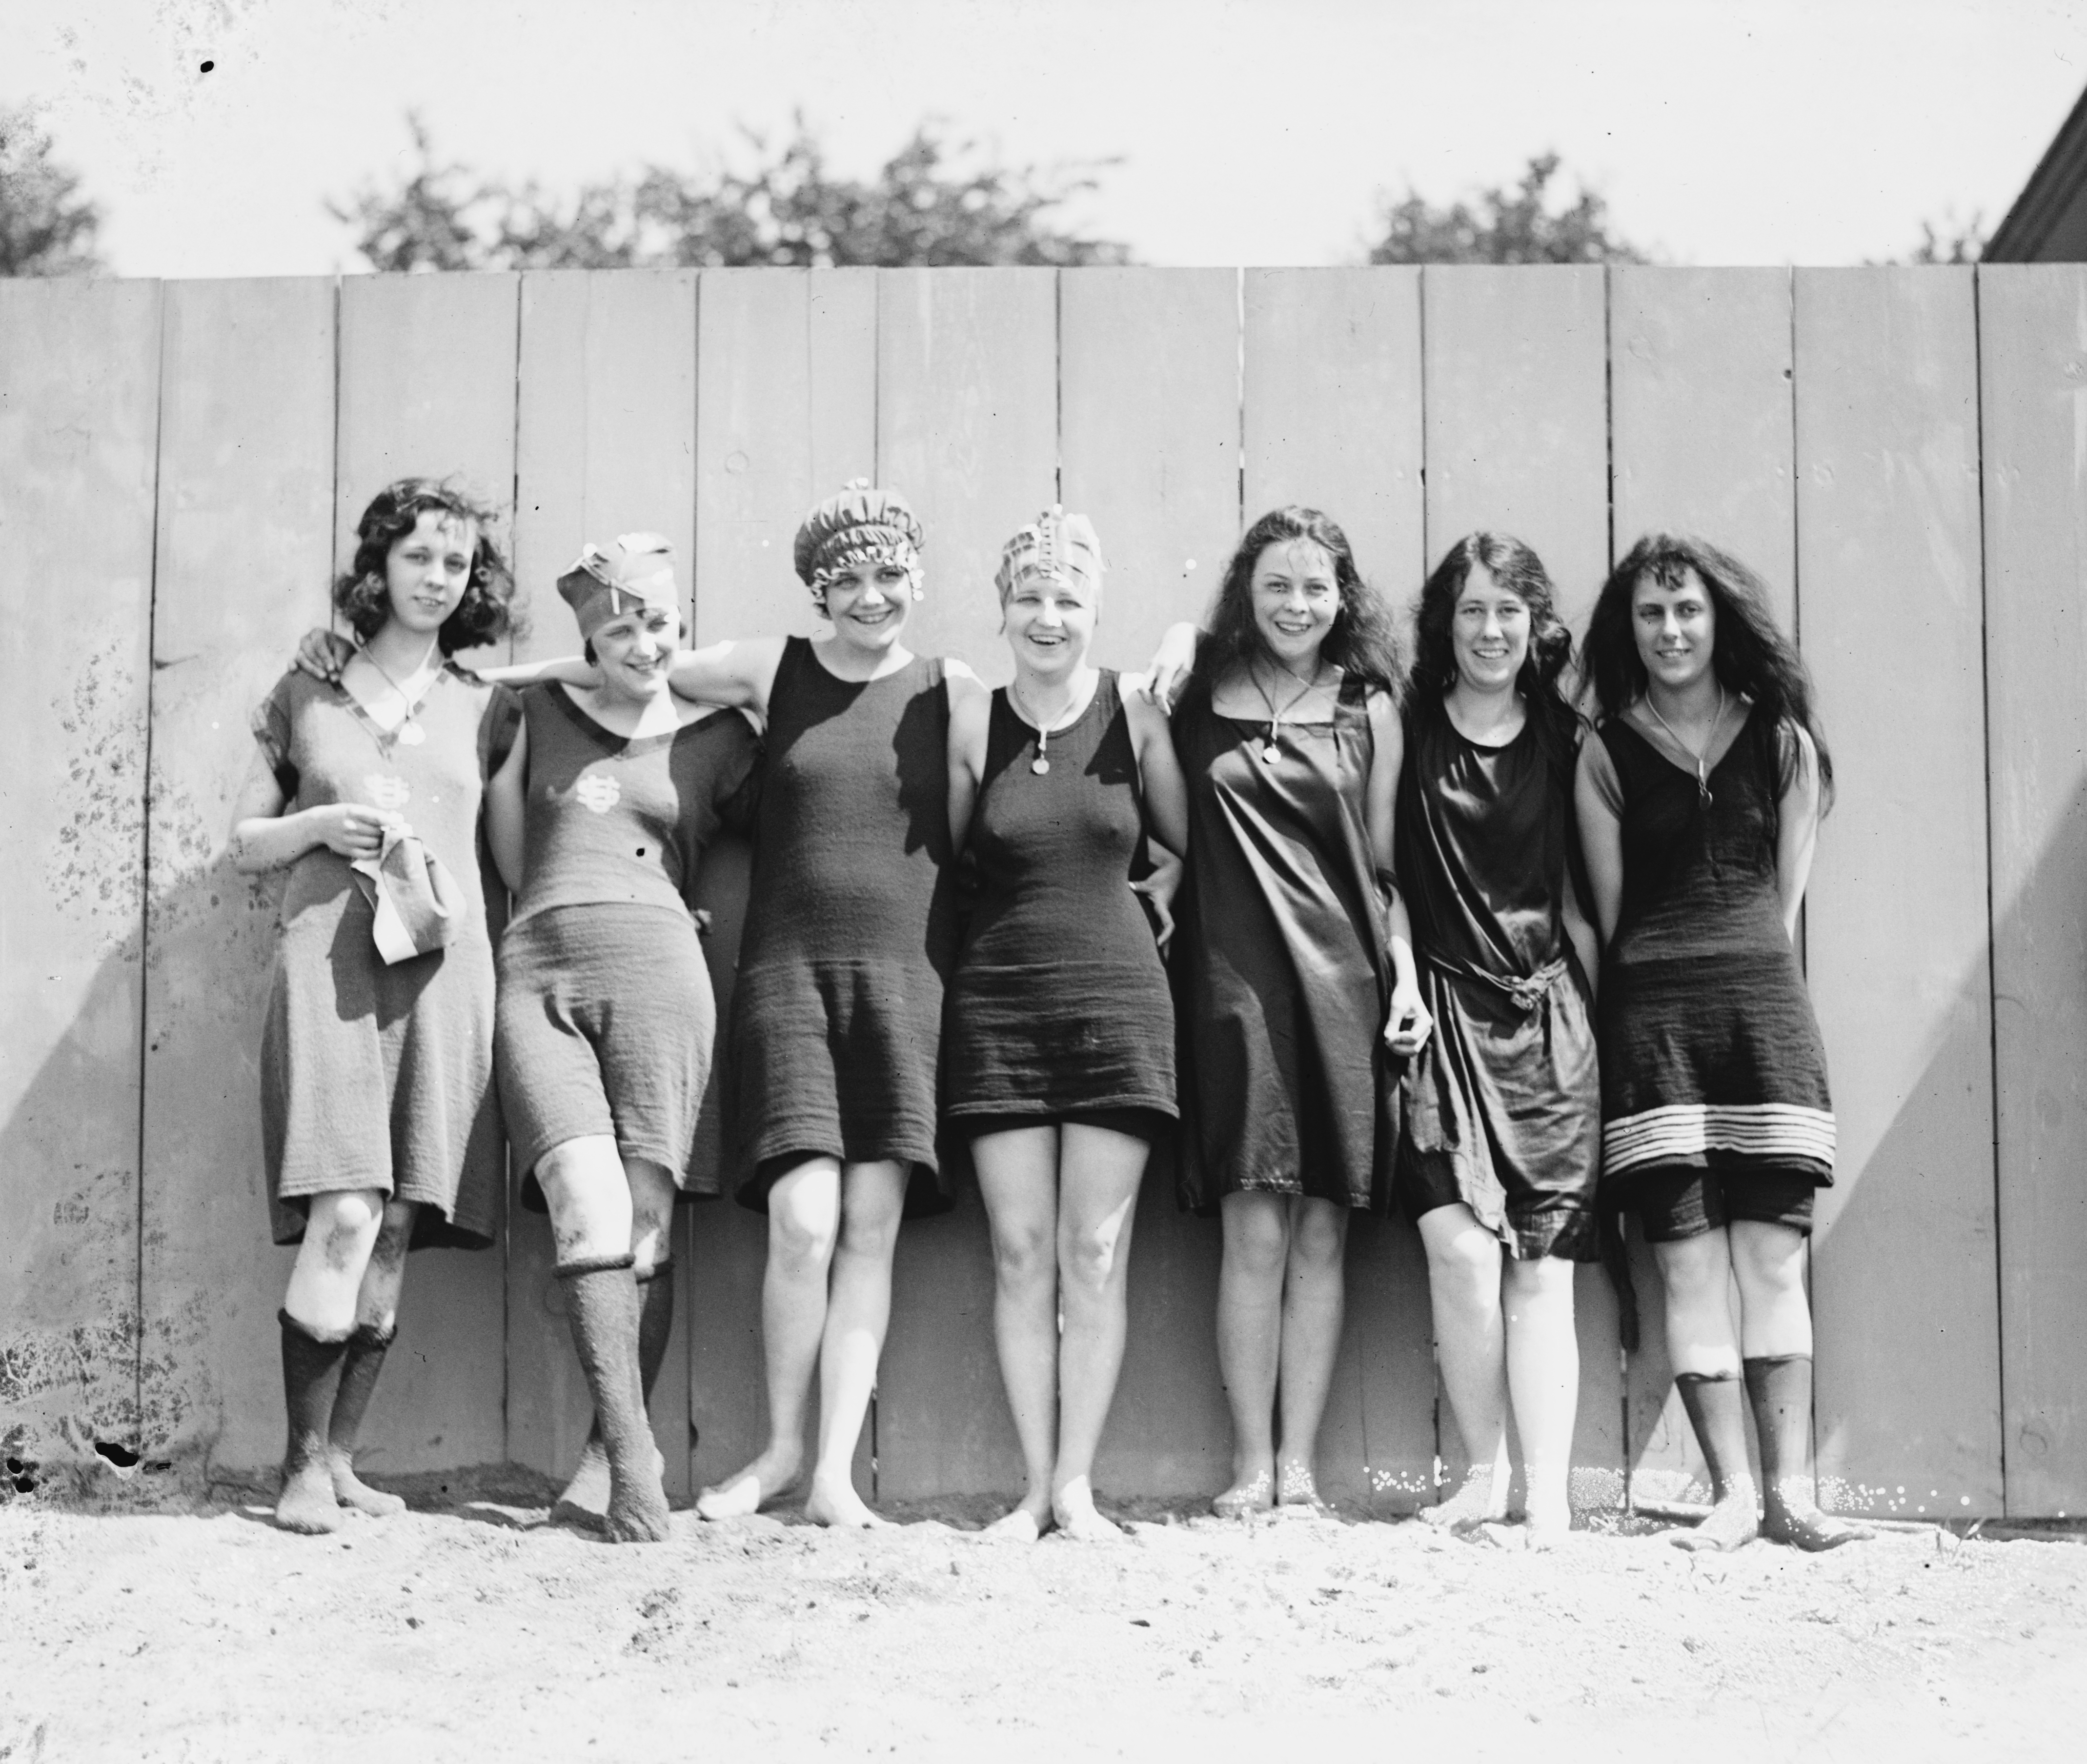 Women in swimsuits, circa 1920.